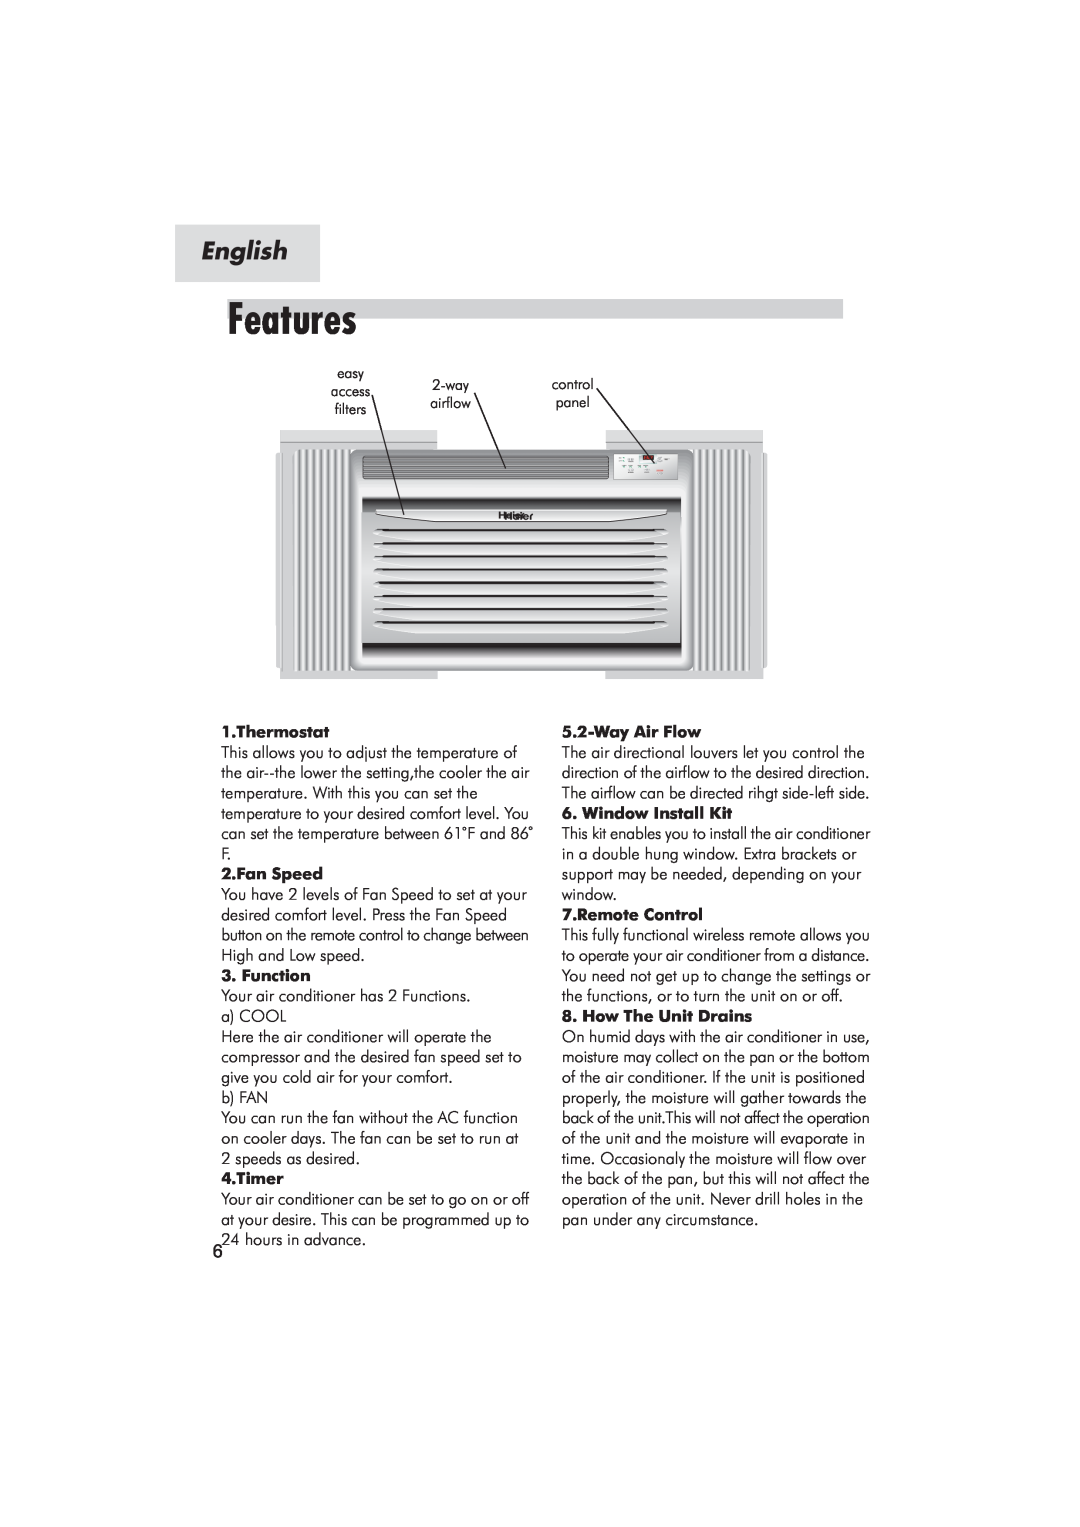 Haier HWR05XCJ manual Thermostat, Fan Speed, Function, Timer, WayAir Flow, Window Install Kit, Remote Control 